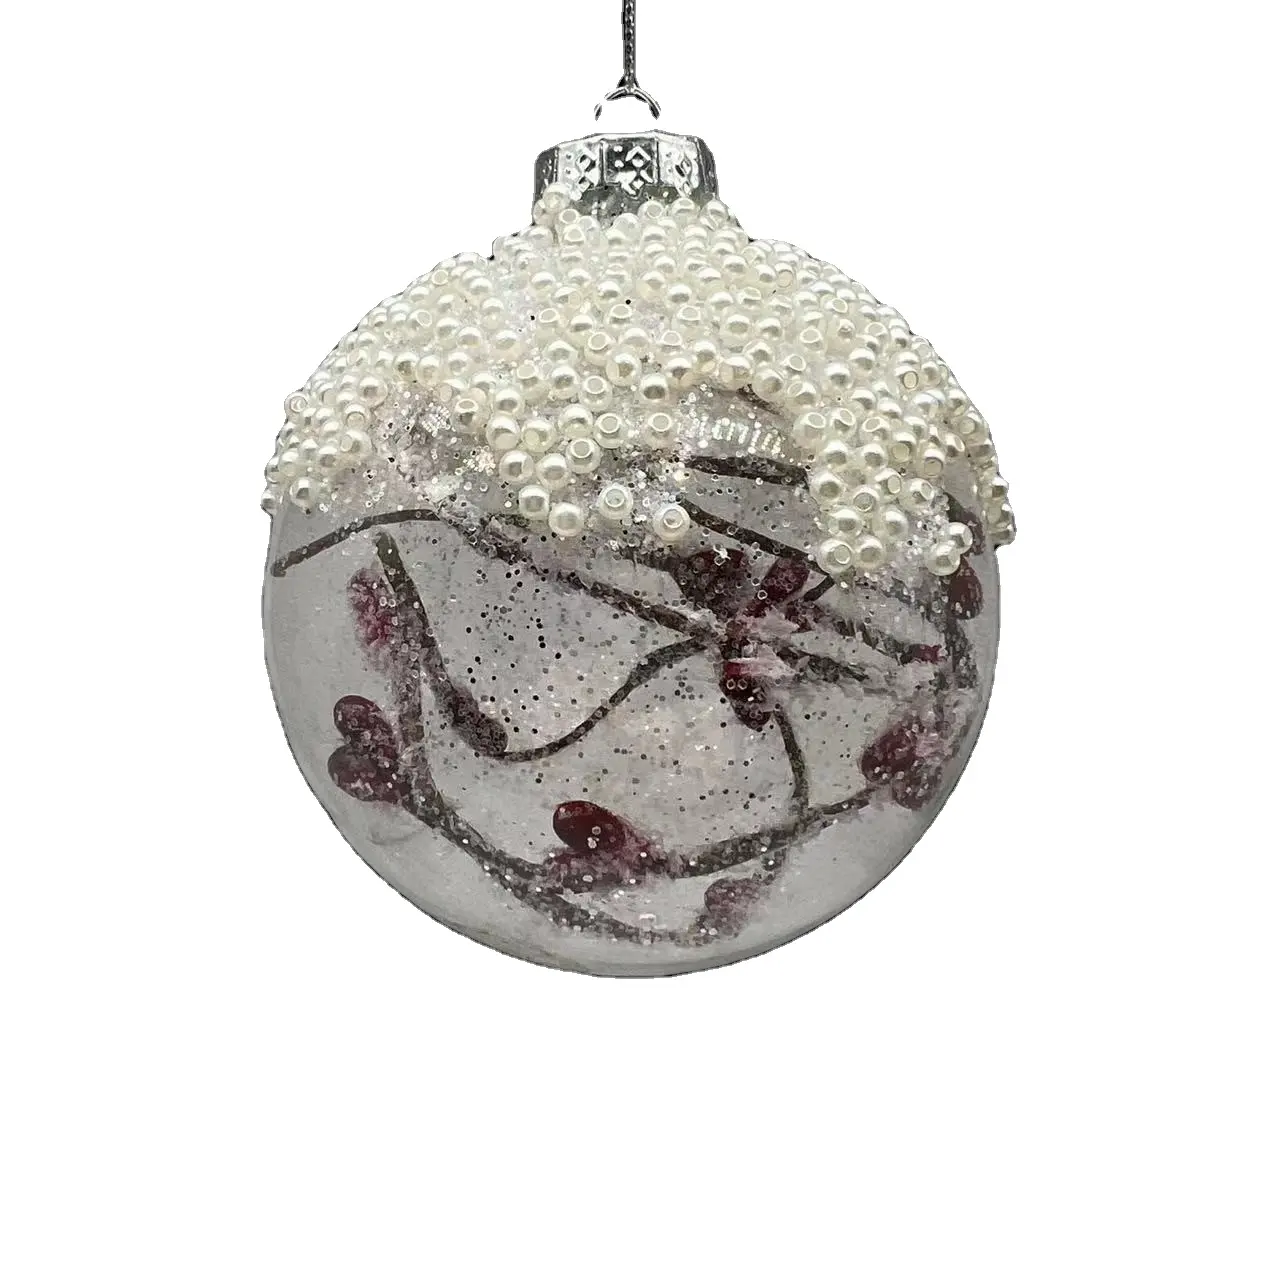 Deft design Fashion Item Type Ornaments Christmas Decor Glass Balls